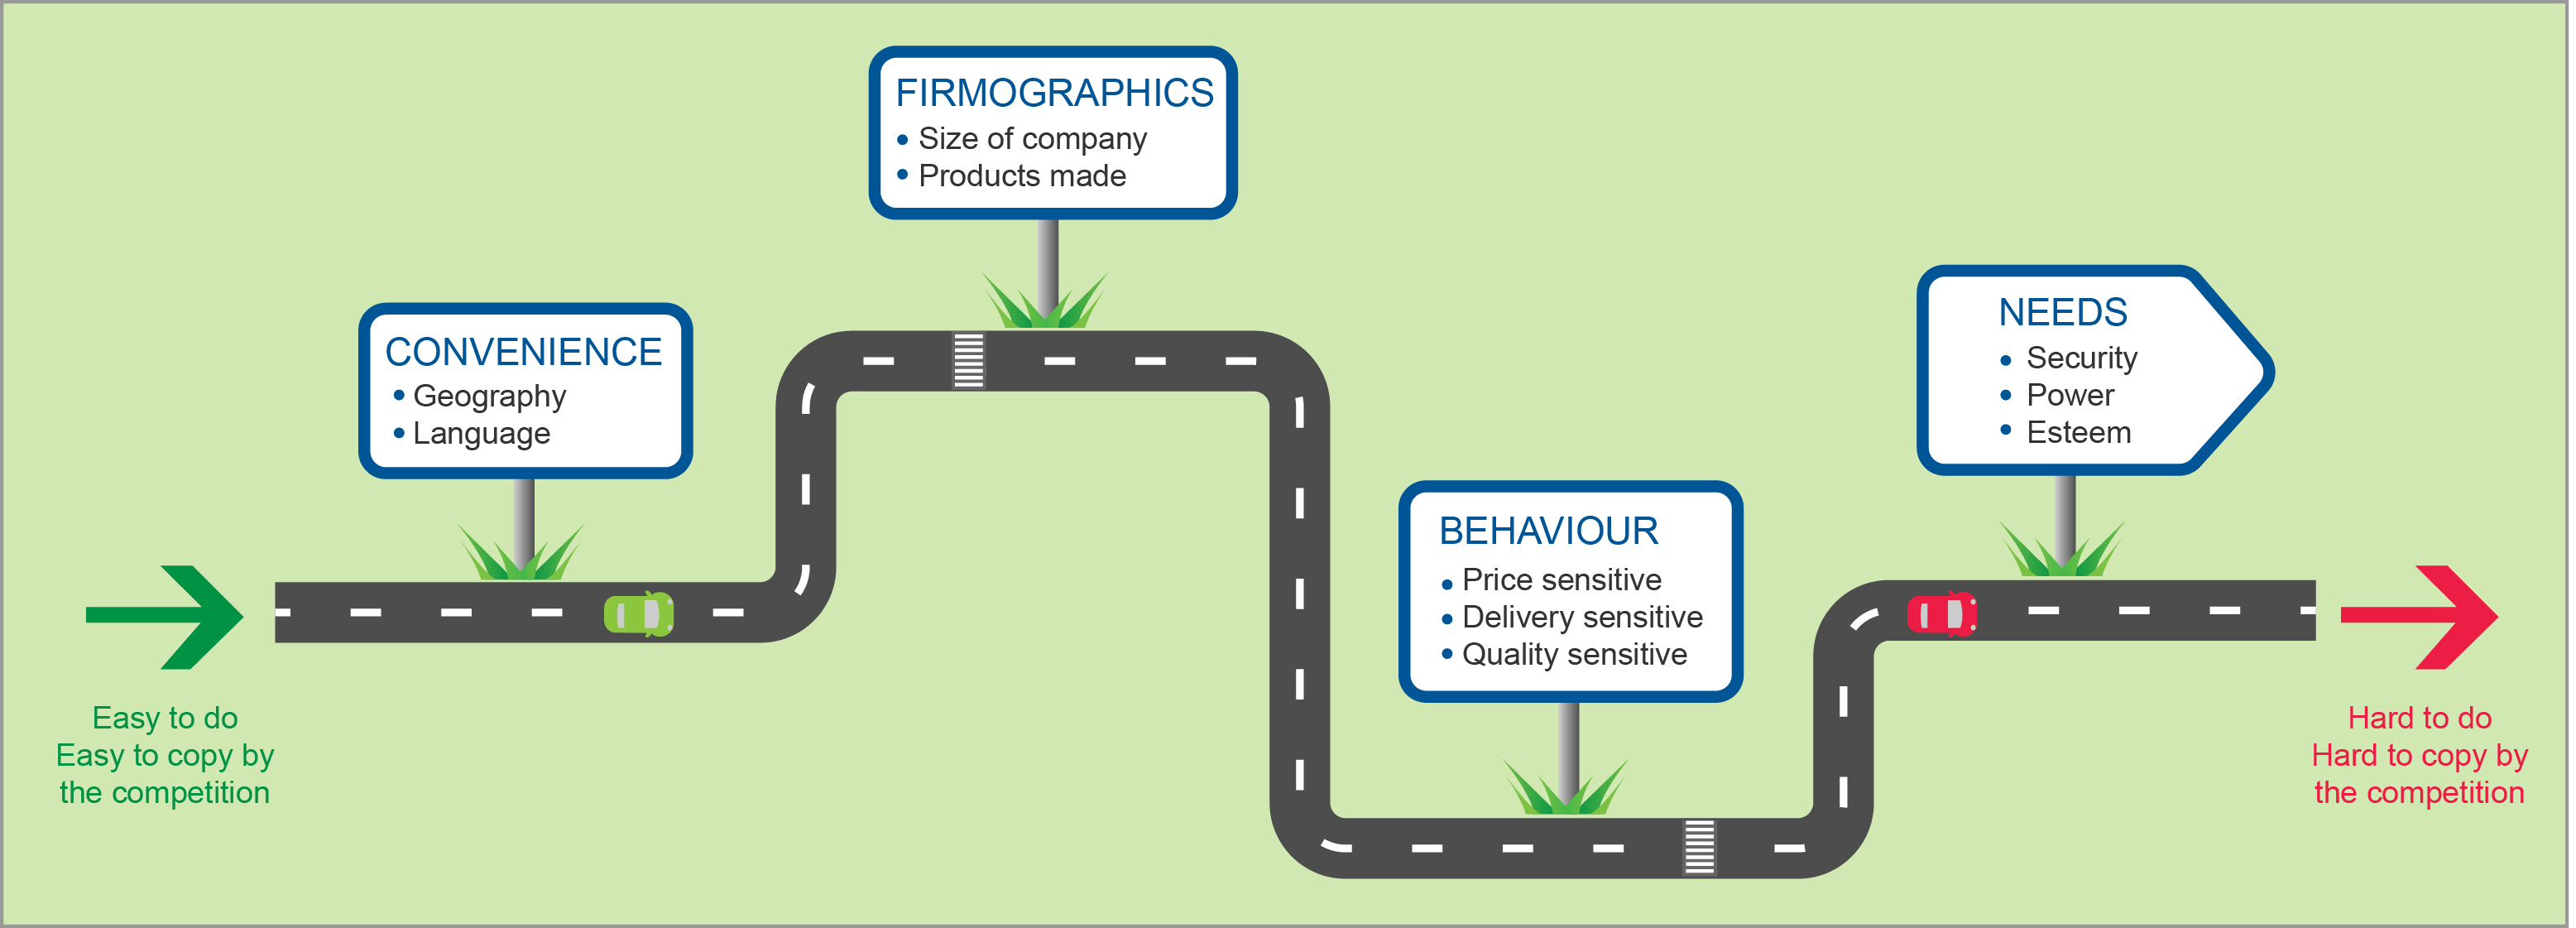 B2B market segmentation: The road to a needs-based segmentation